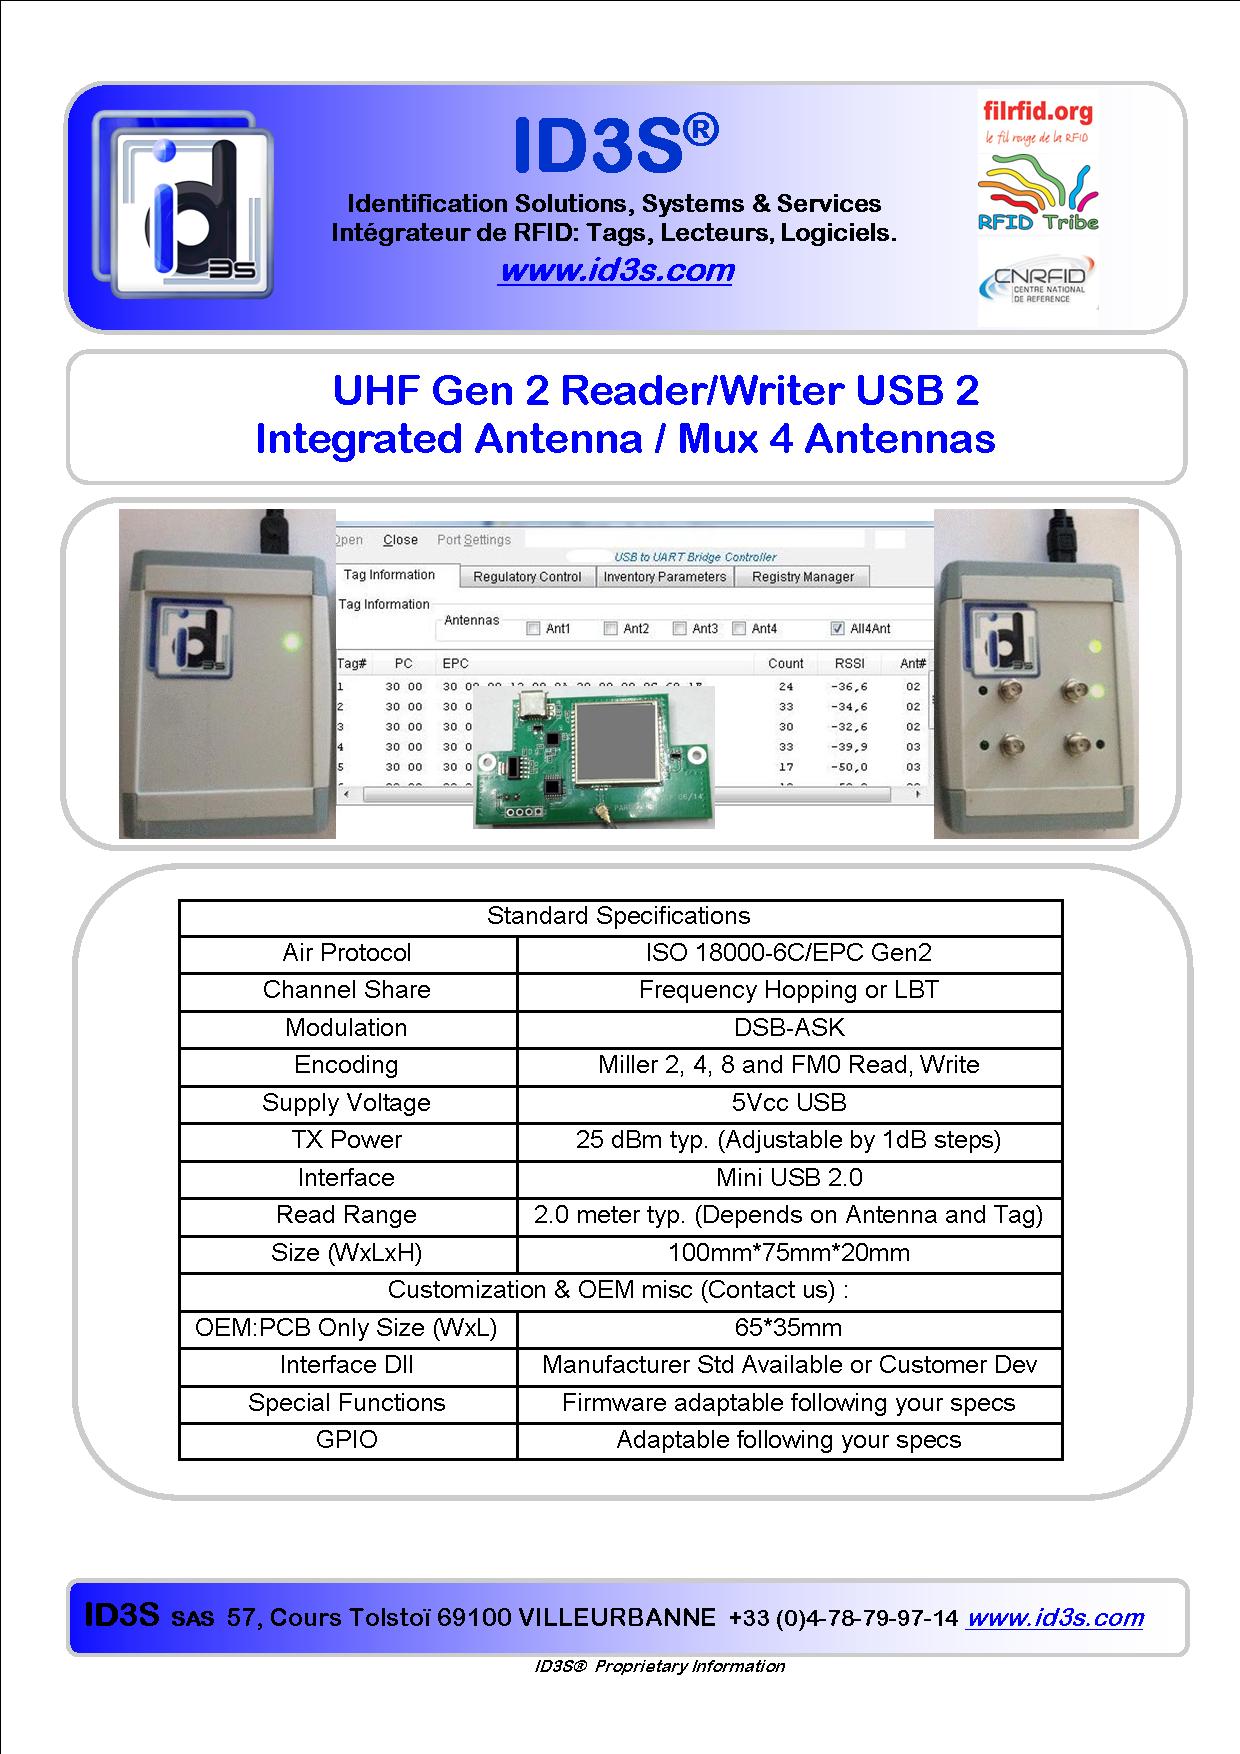 AxId UHF GEN 2 USB 2